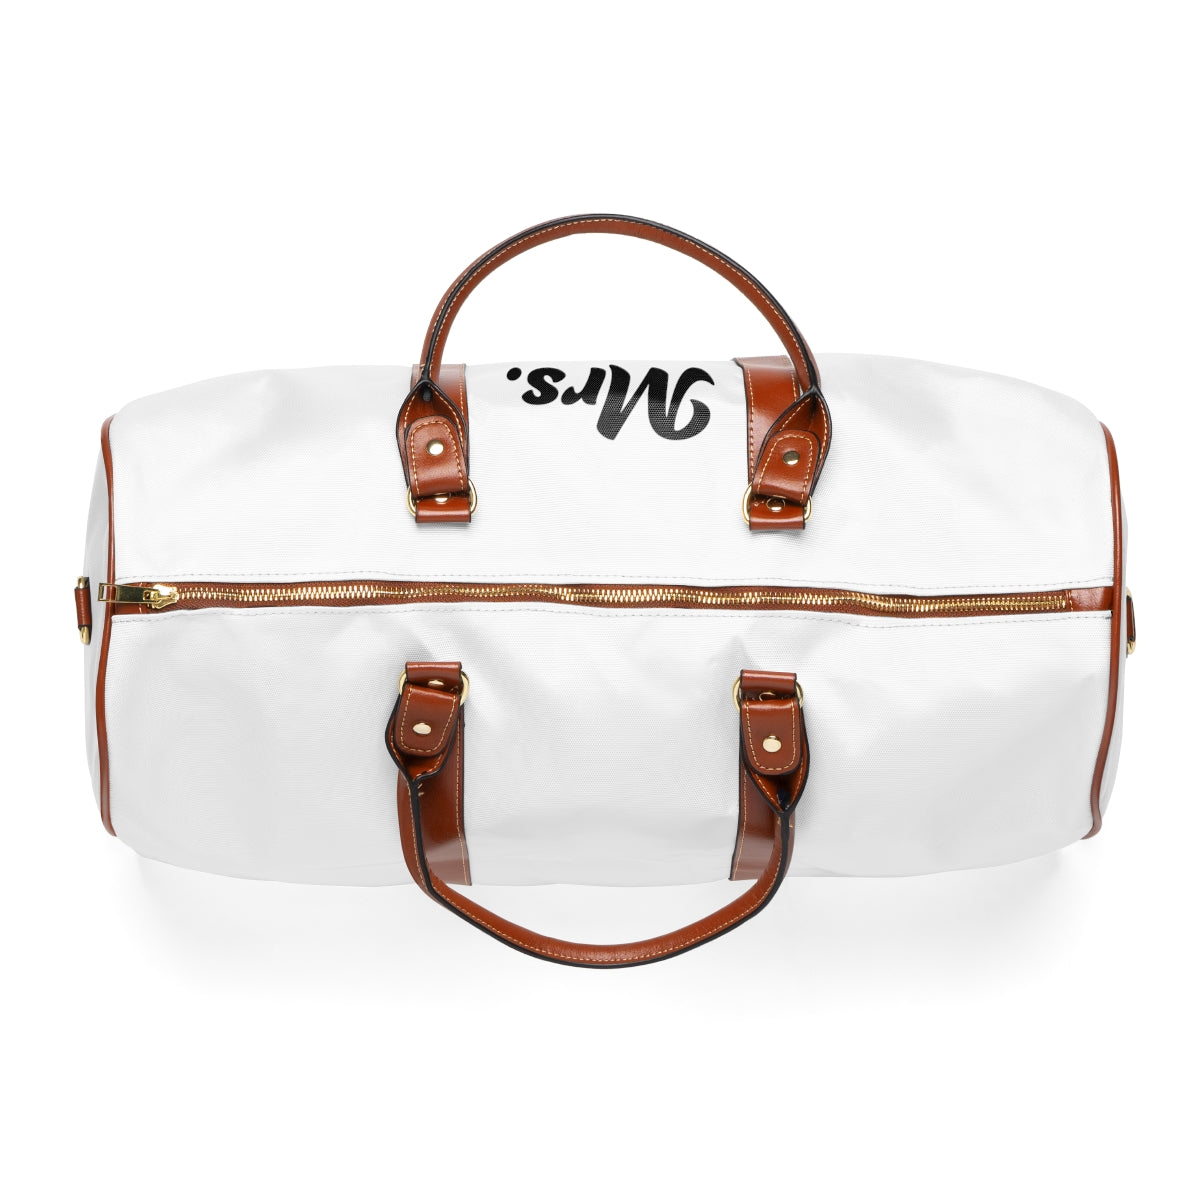 Mrs. Wedding Ring-Waterproof Travel Bag